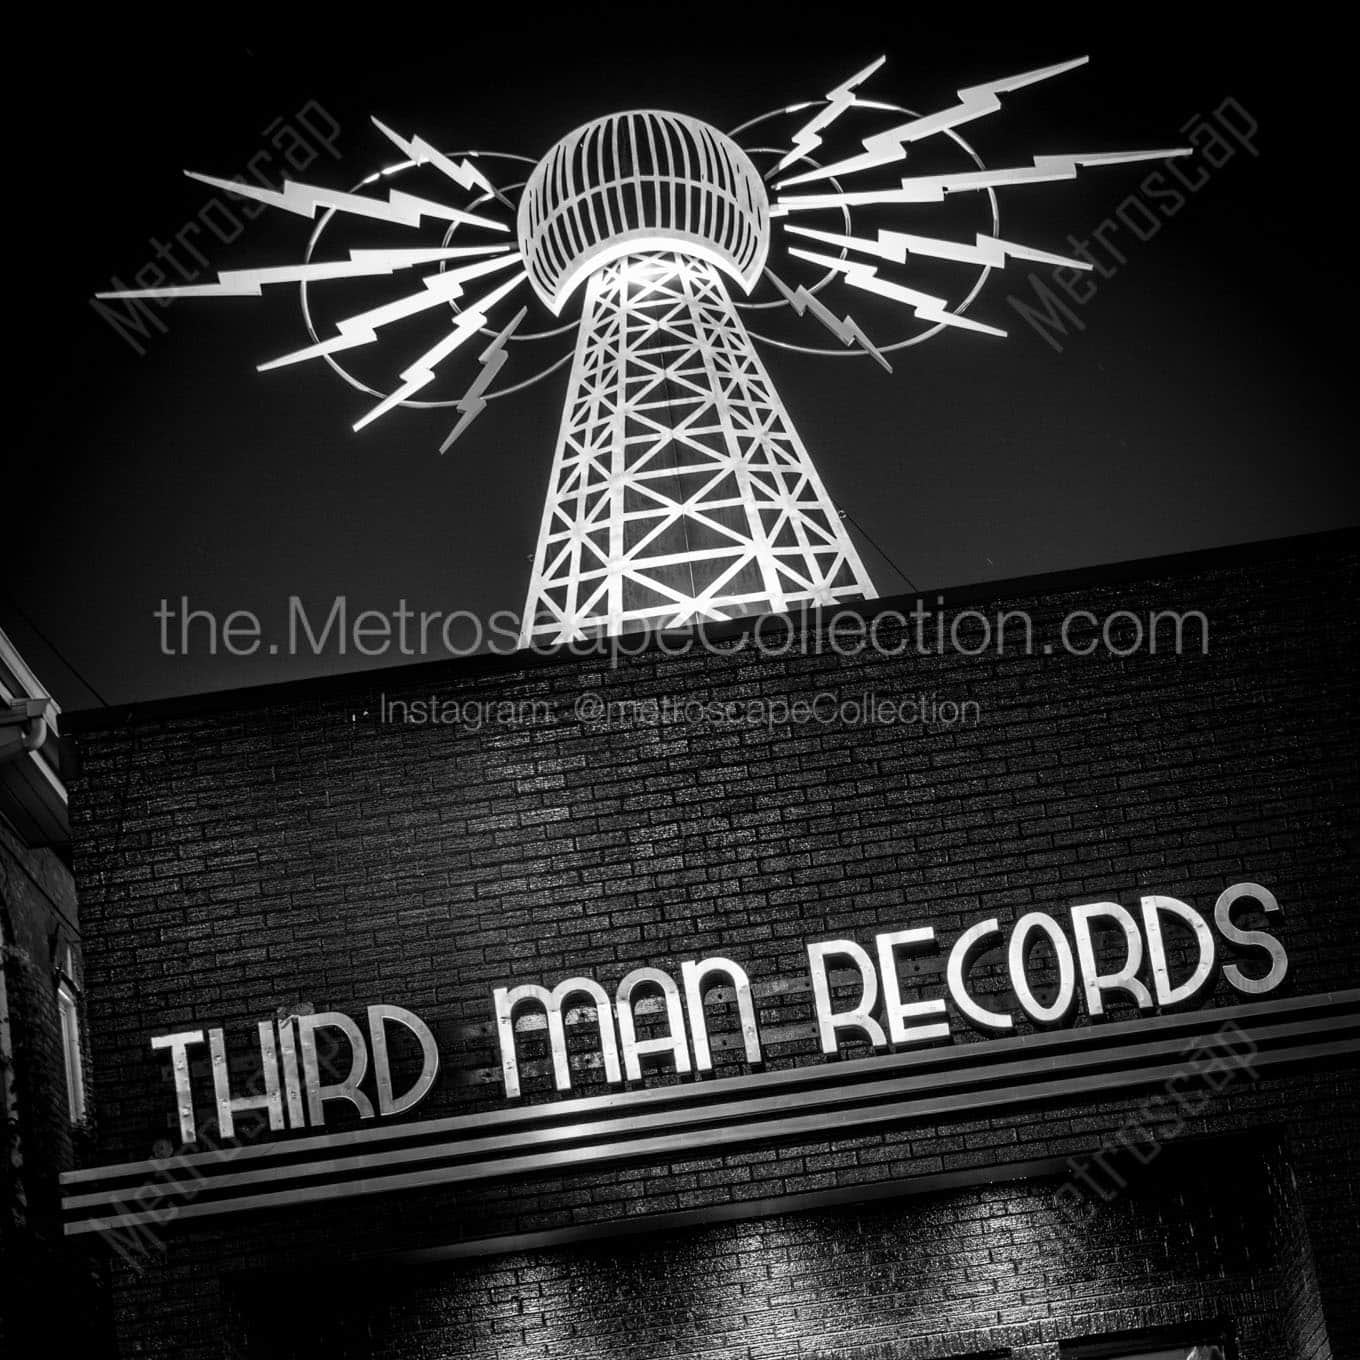 thirdman records Black & White Wall Art